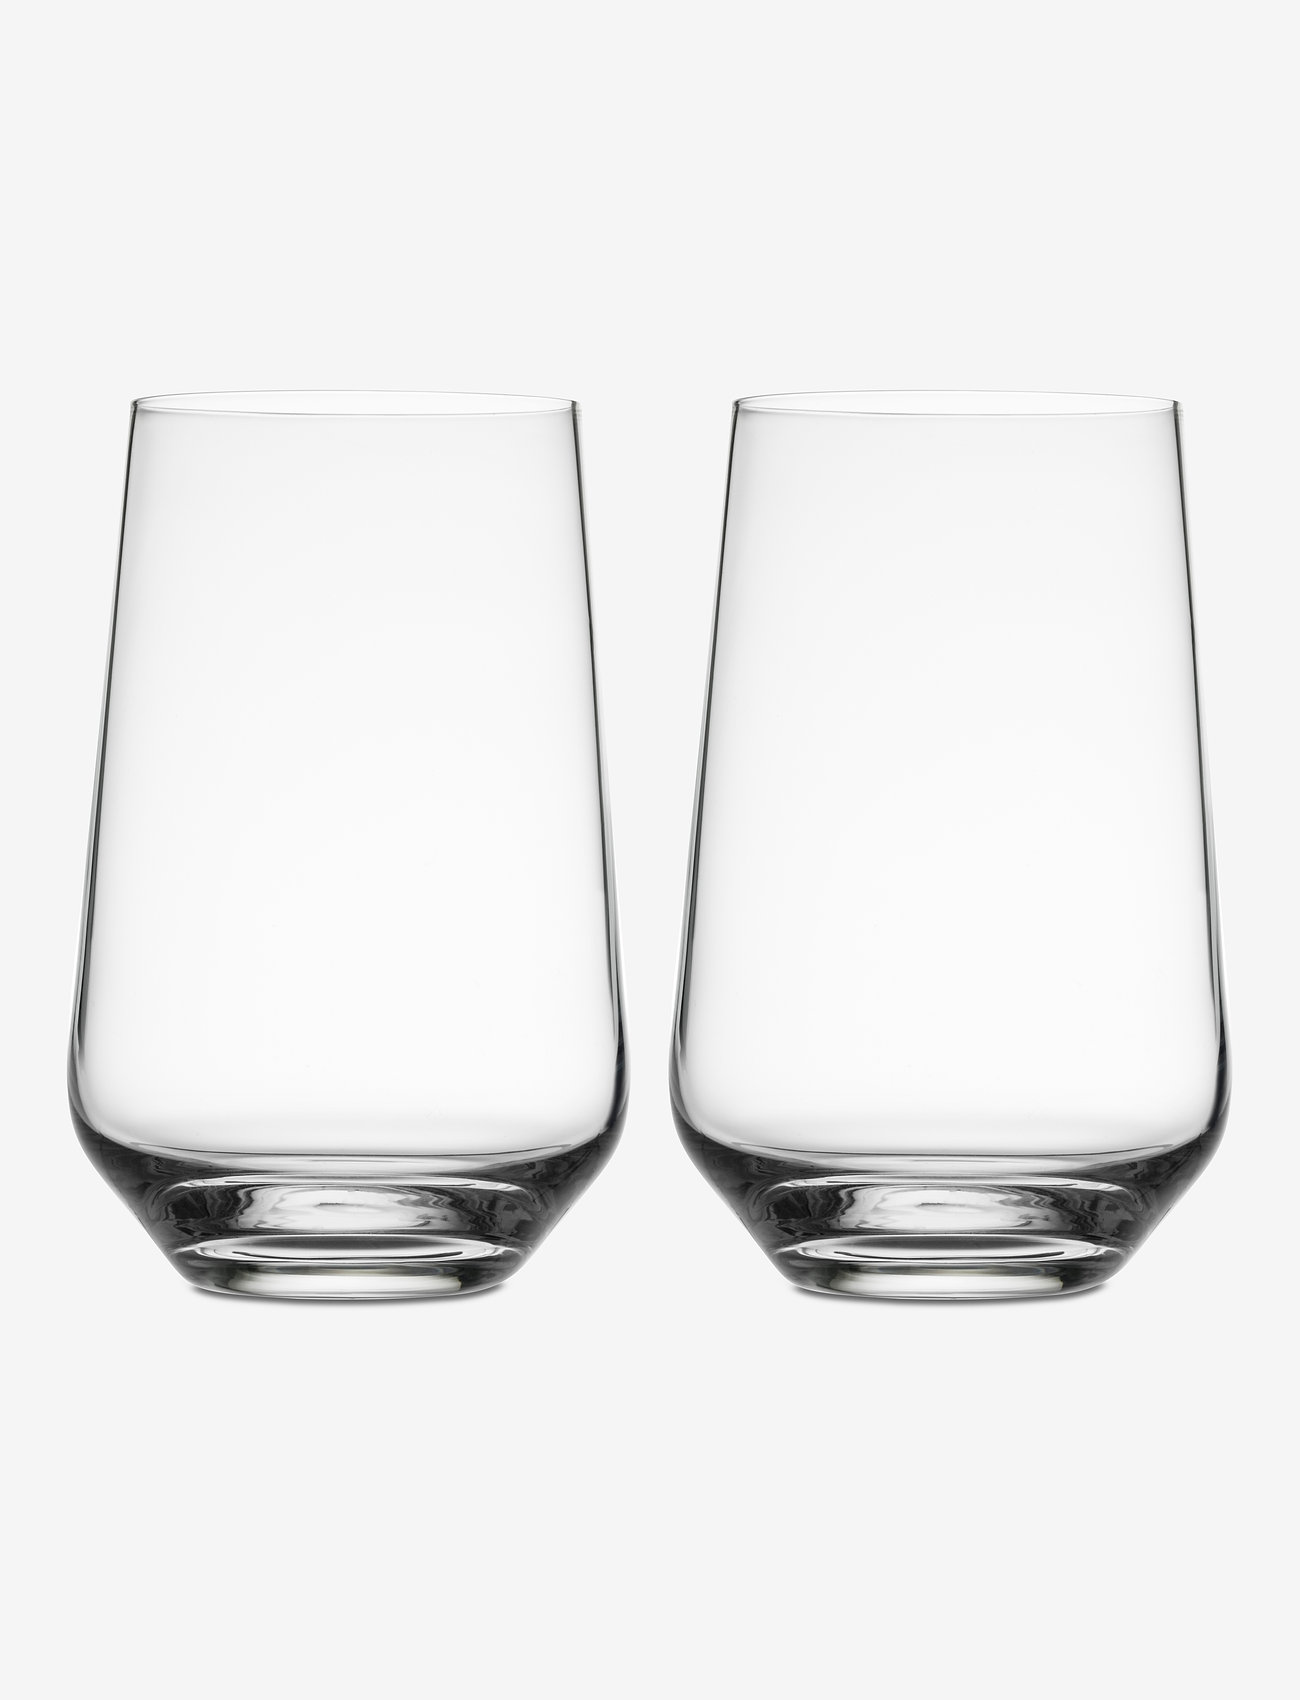 Iittala - Essence universal glass 55cl 2pcs - clear - 0